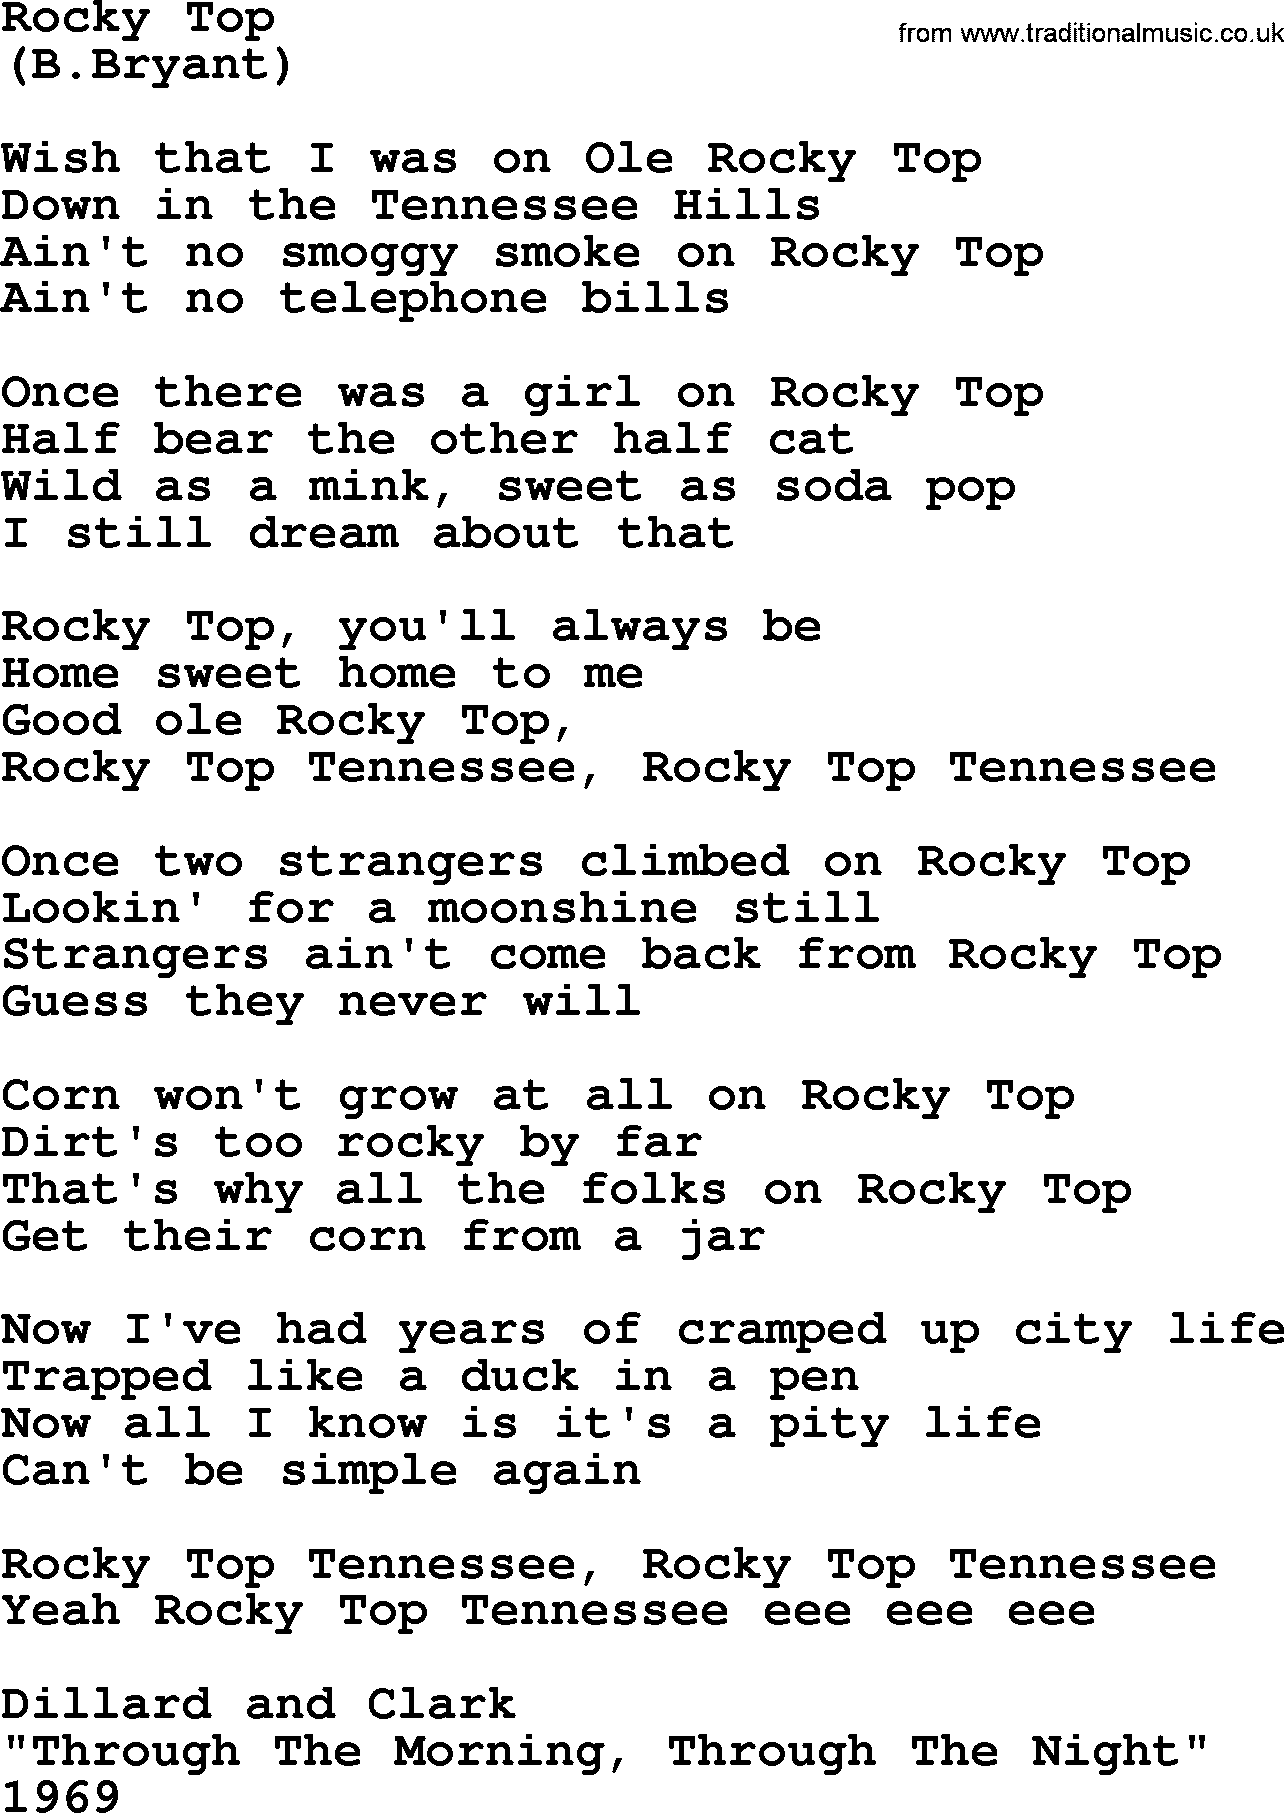 The Byrds song Rocky Top, lyrics